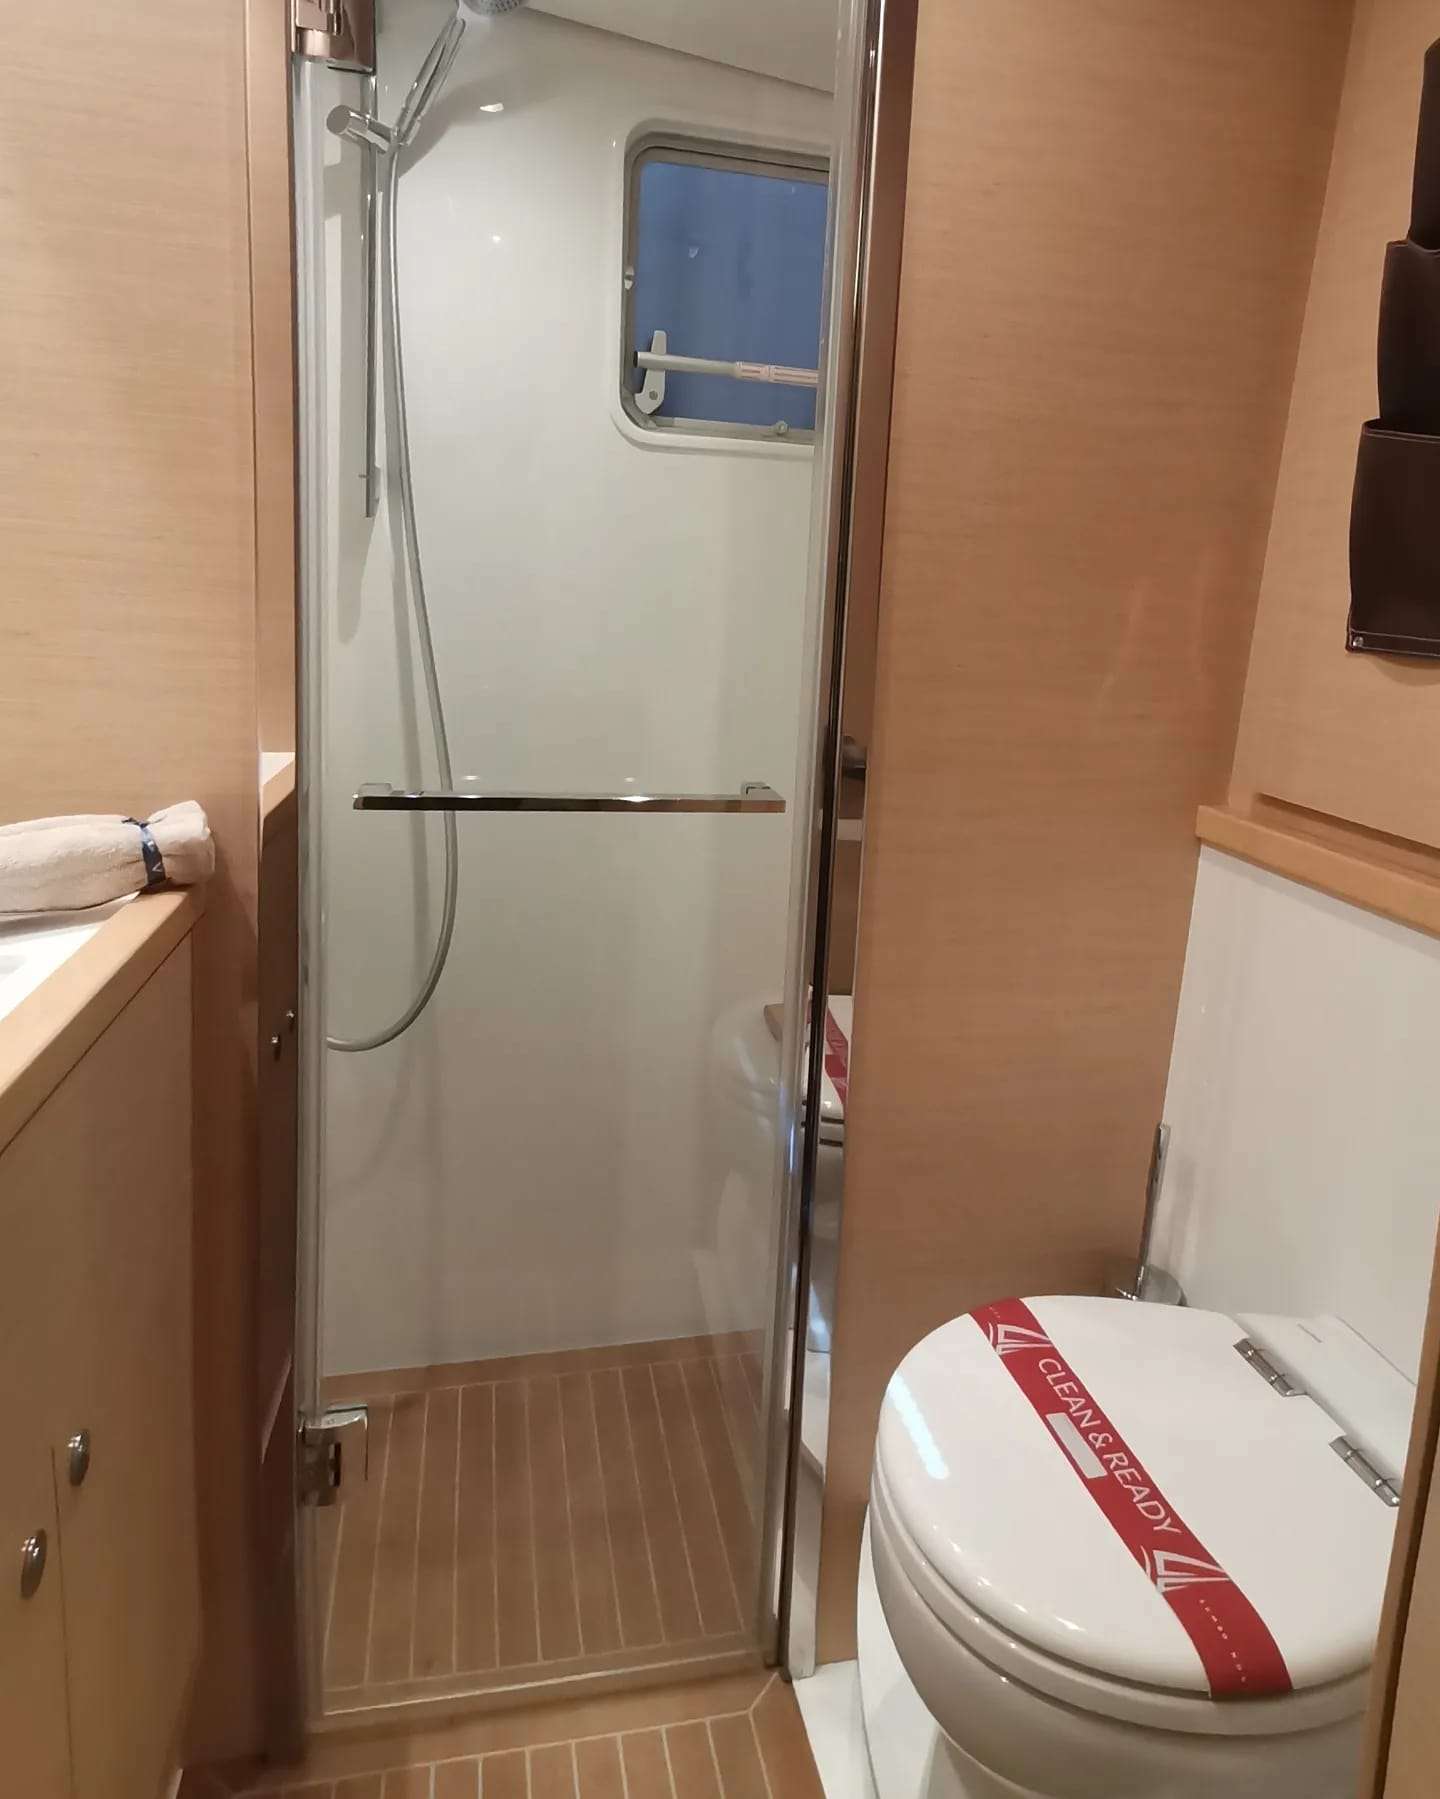 ISLAS CHAFARINAS Yacht Charter - Bathroom and shower area